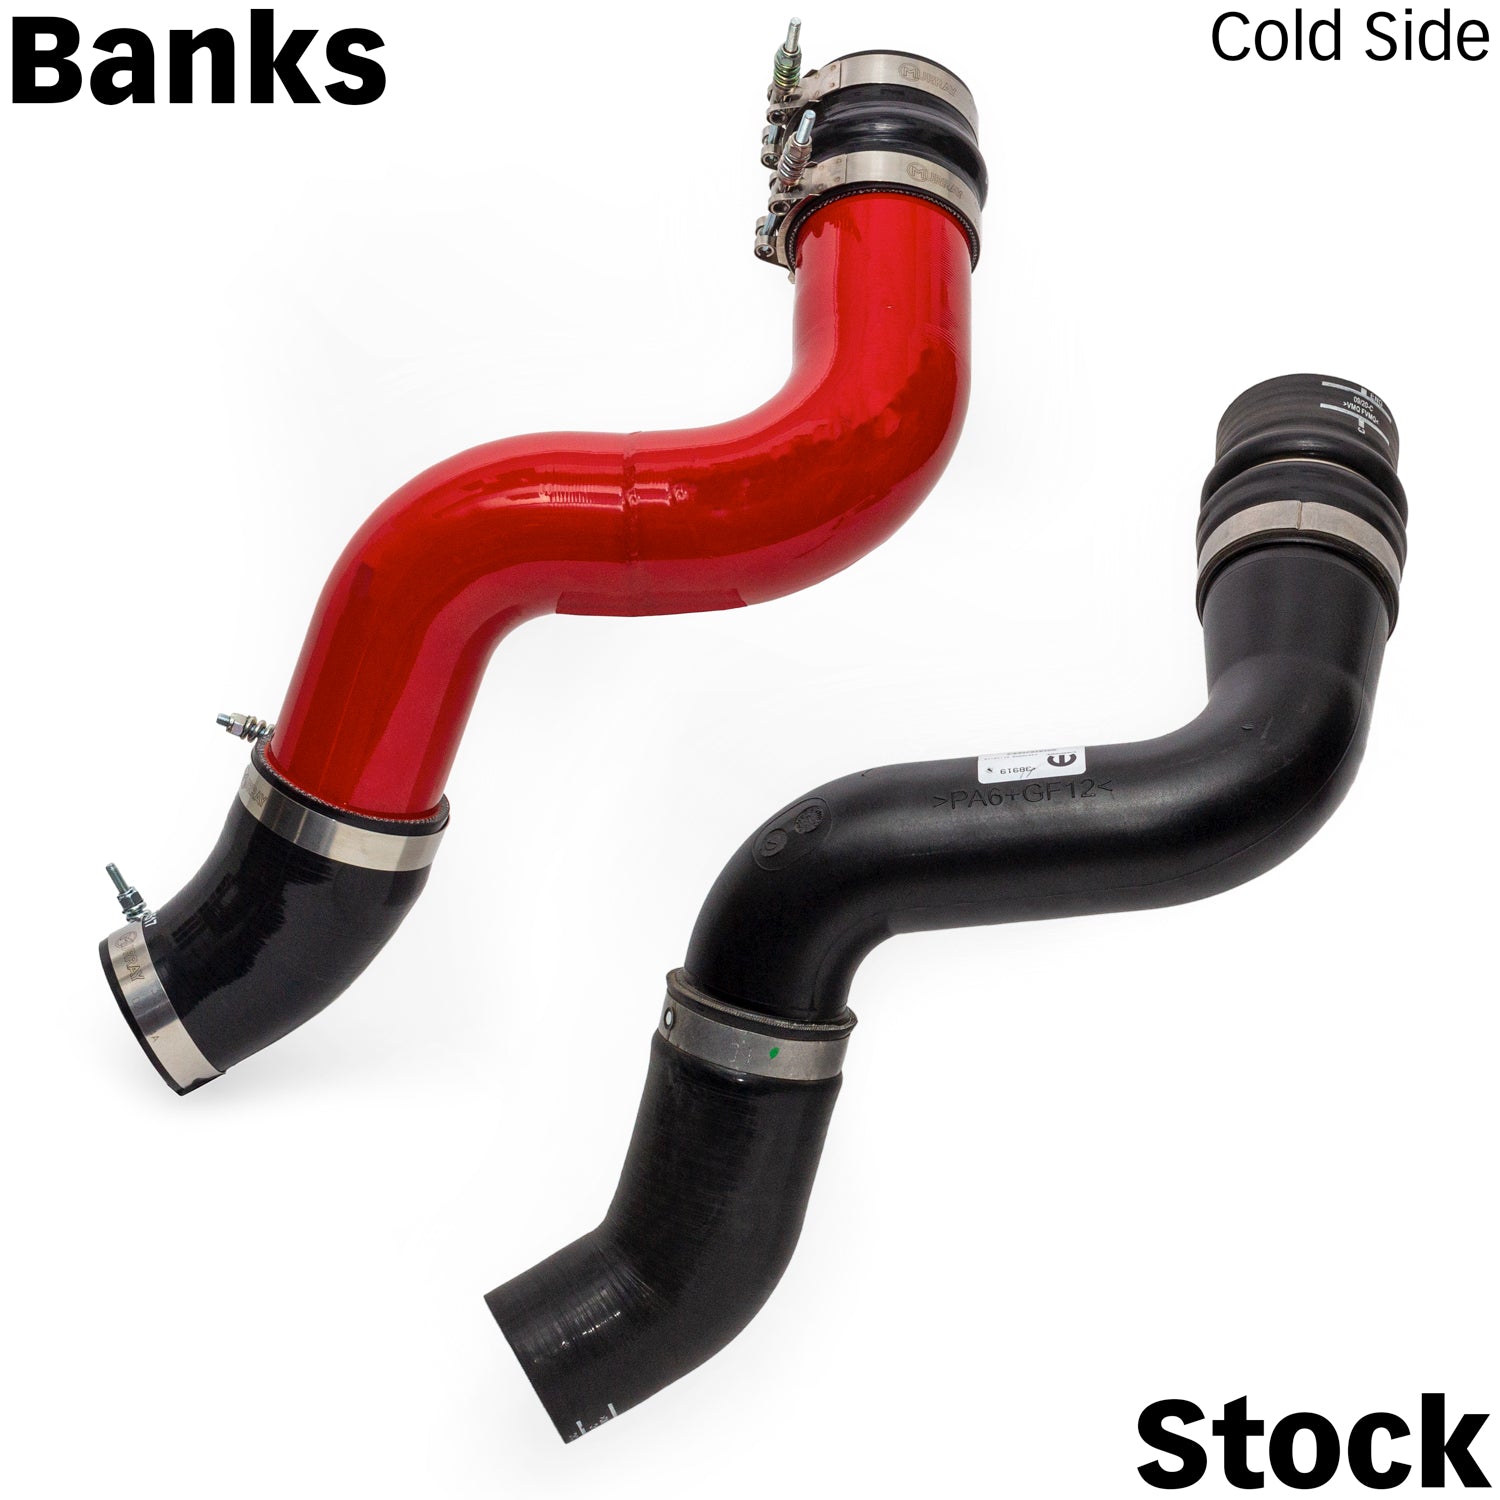 Banks vs Stock Cold Side Boost Tube Comparison for 2019+ Ram 2500/3500 6.7L